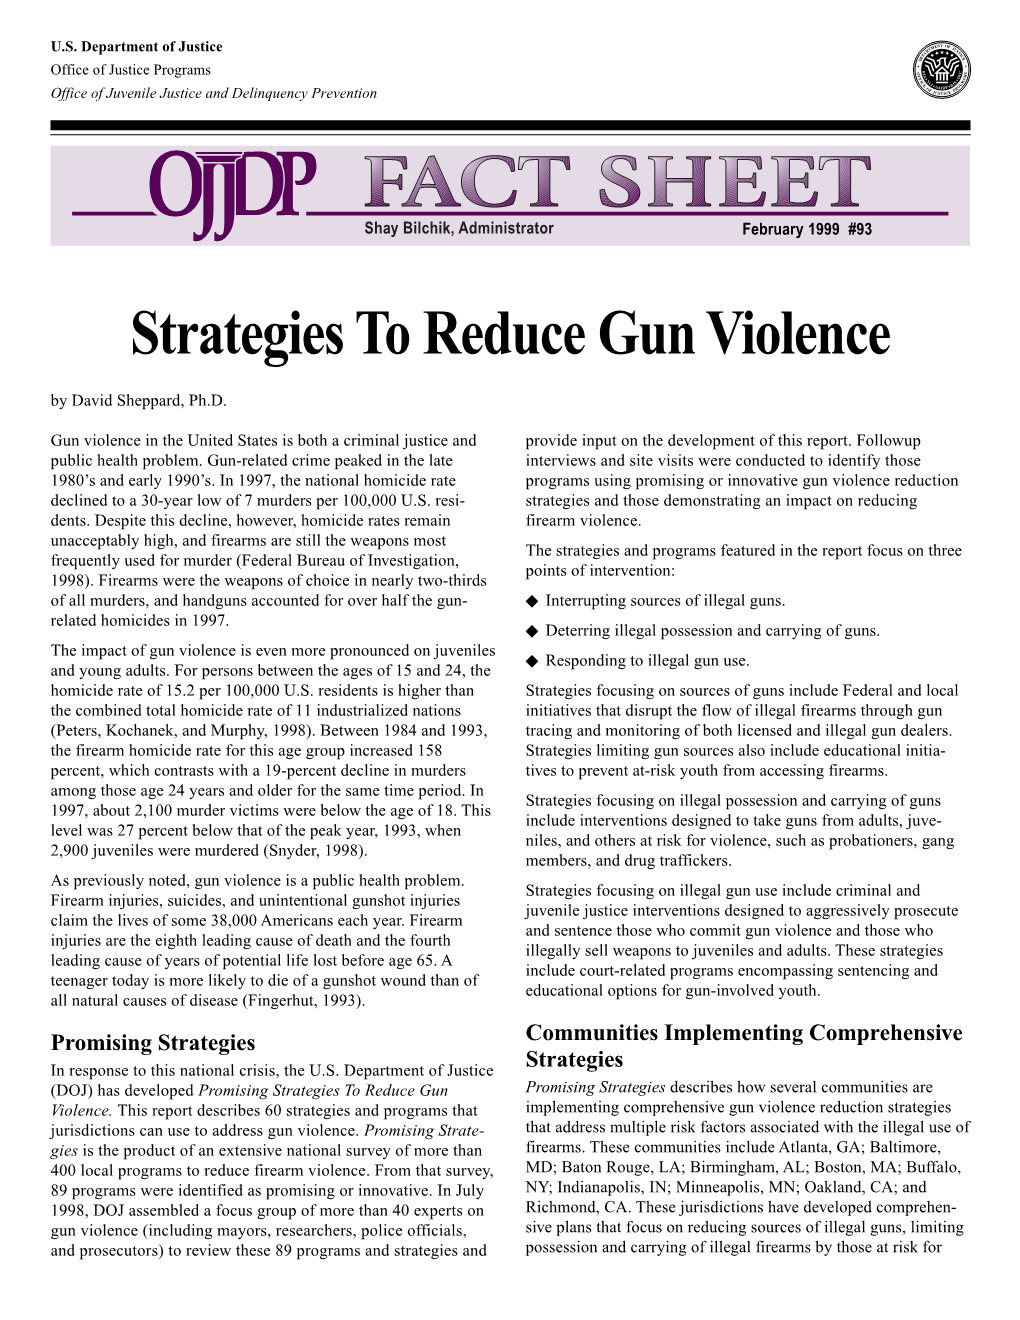 Strategies to Reduce Gun Violence by David Sheppard, Ph.D